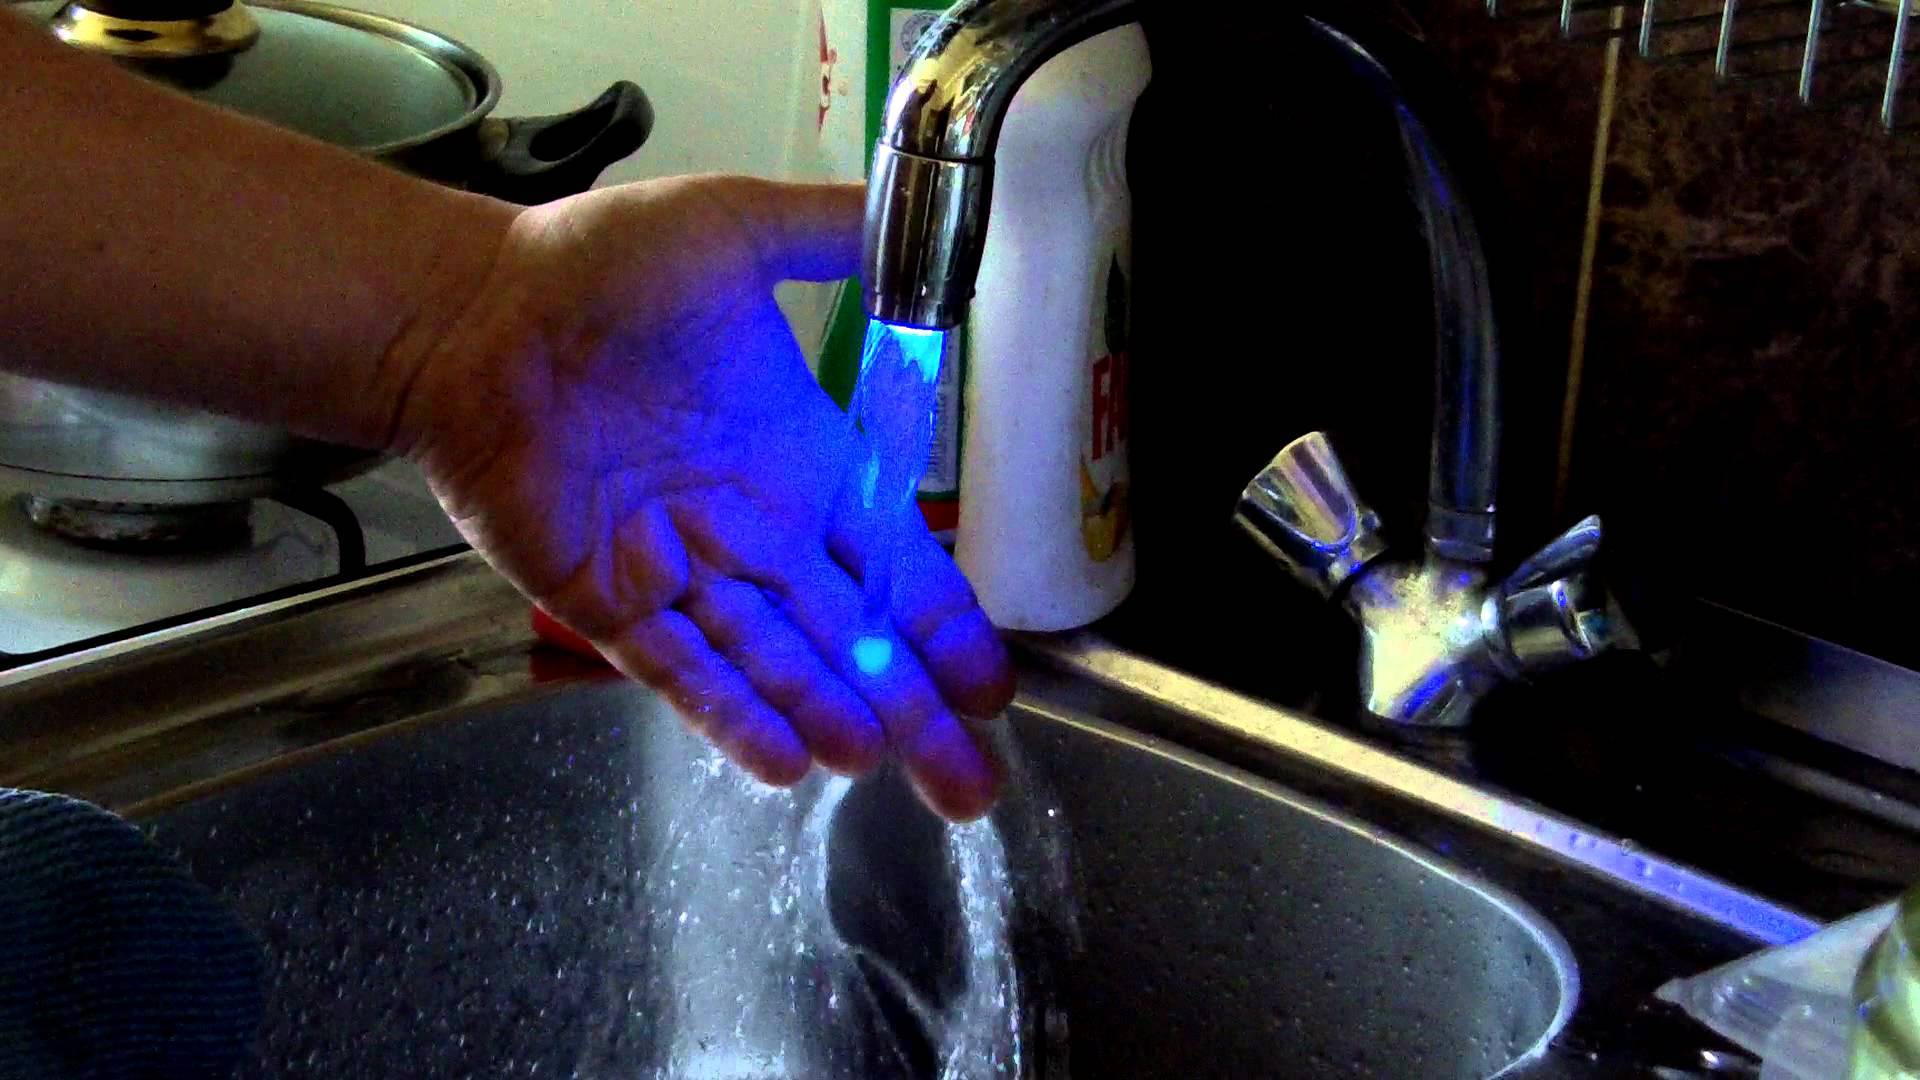 Кран с подсветкой воды. Подсветка для воды из крана. Насадка на кран с подсветкой. Подсветка воды в кране своими руками. Включи воду на 30